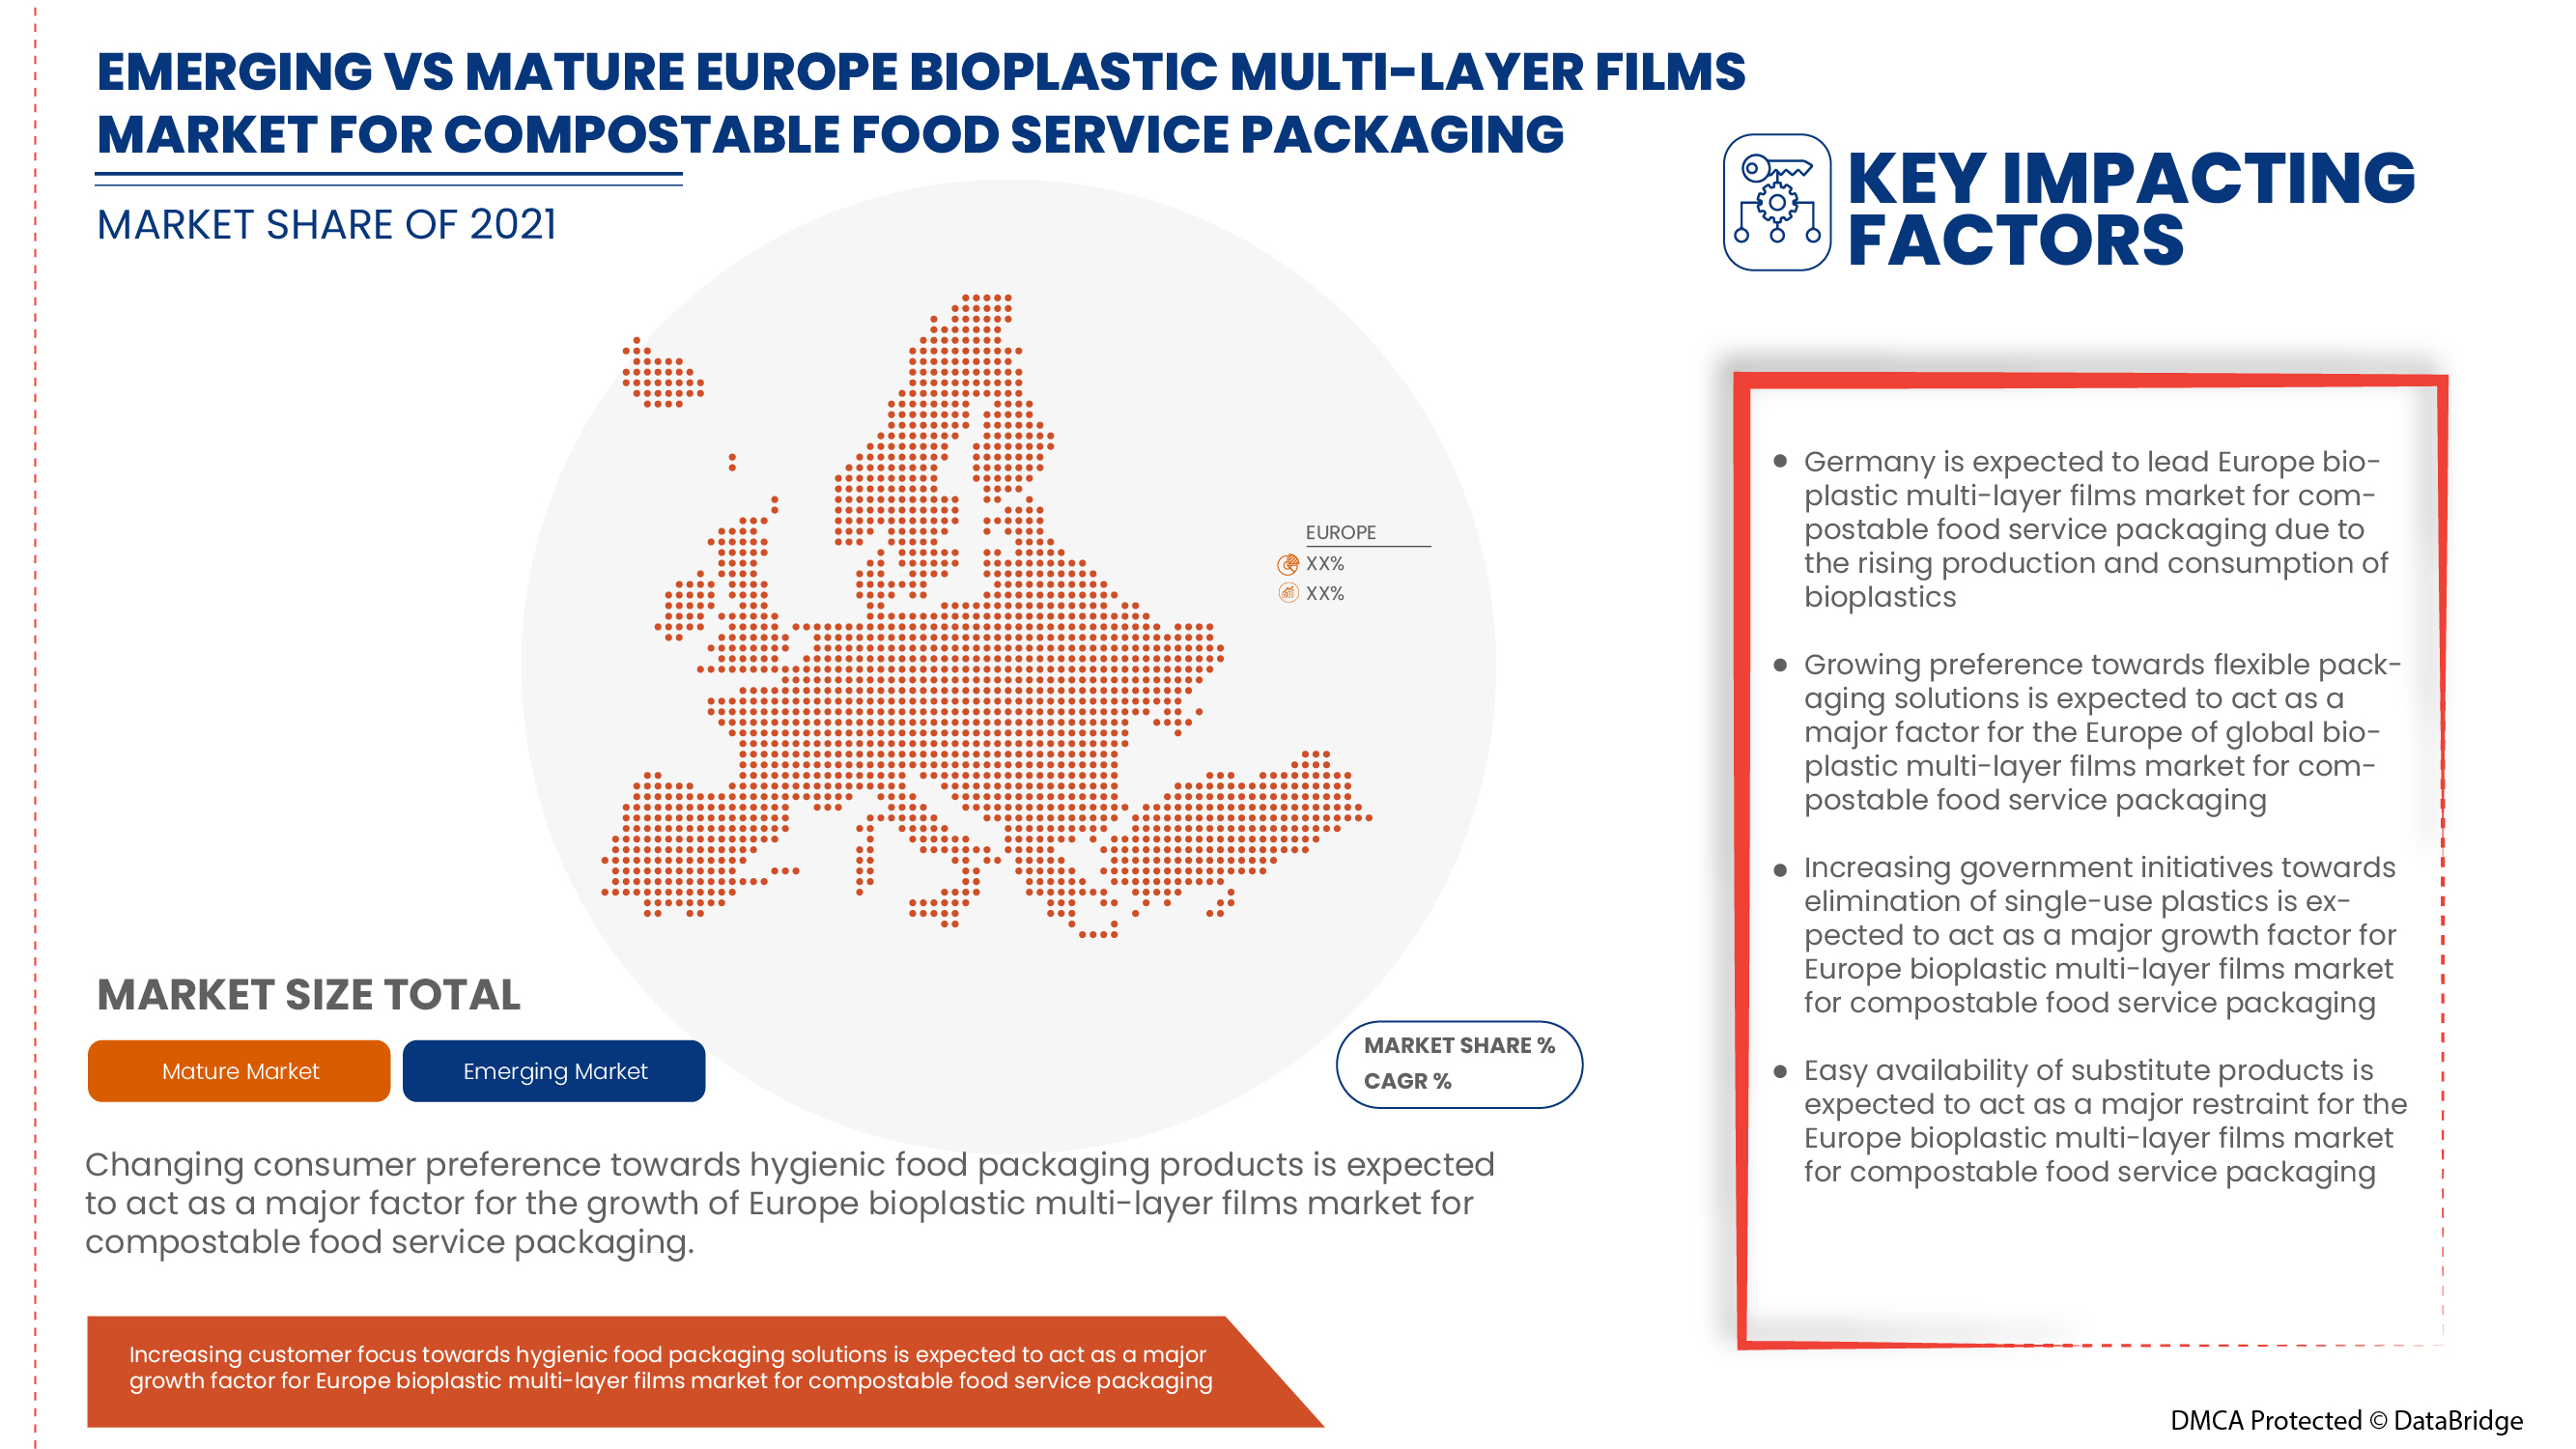 Europe Bioplastic Multi-Layer Films Market 